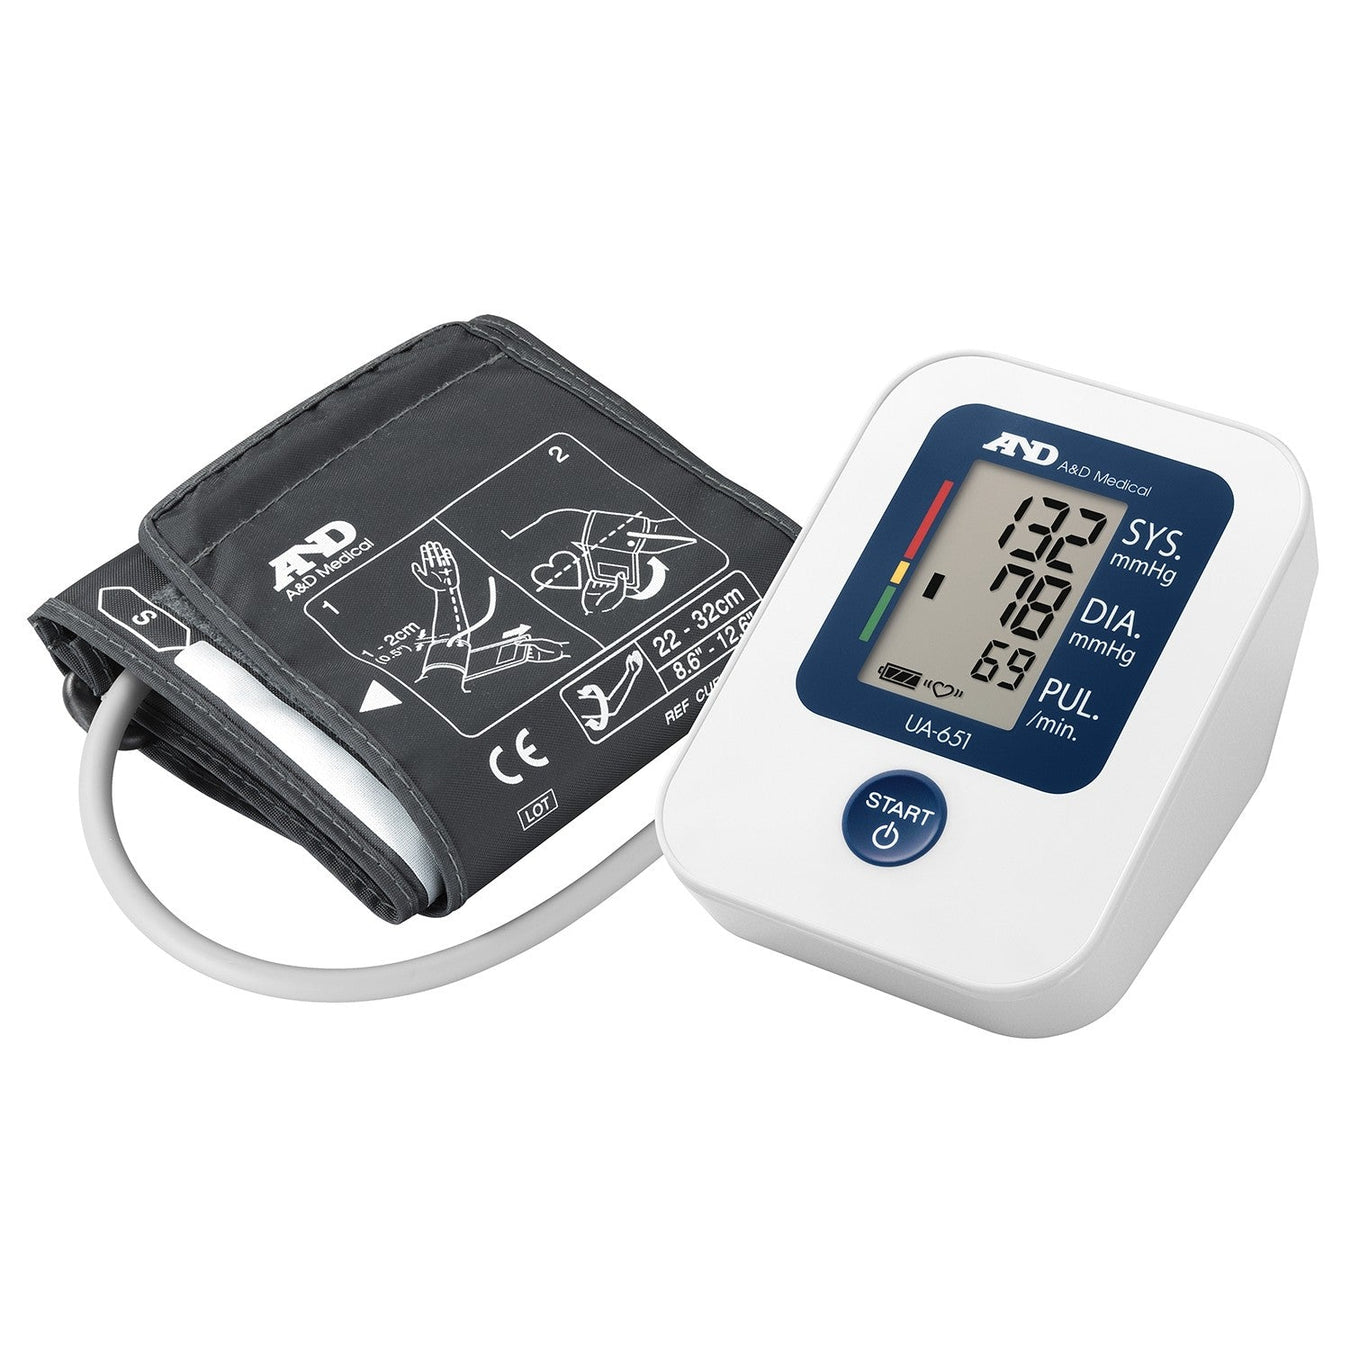 Sphygs & Blood Pressure Monitors